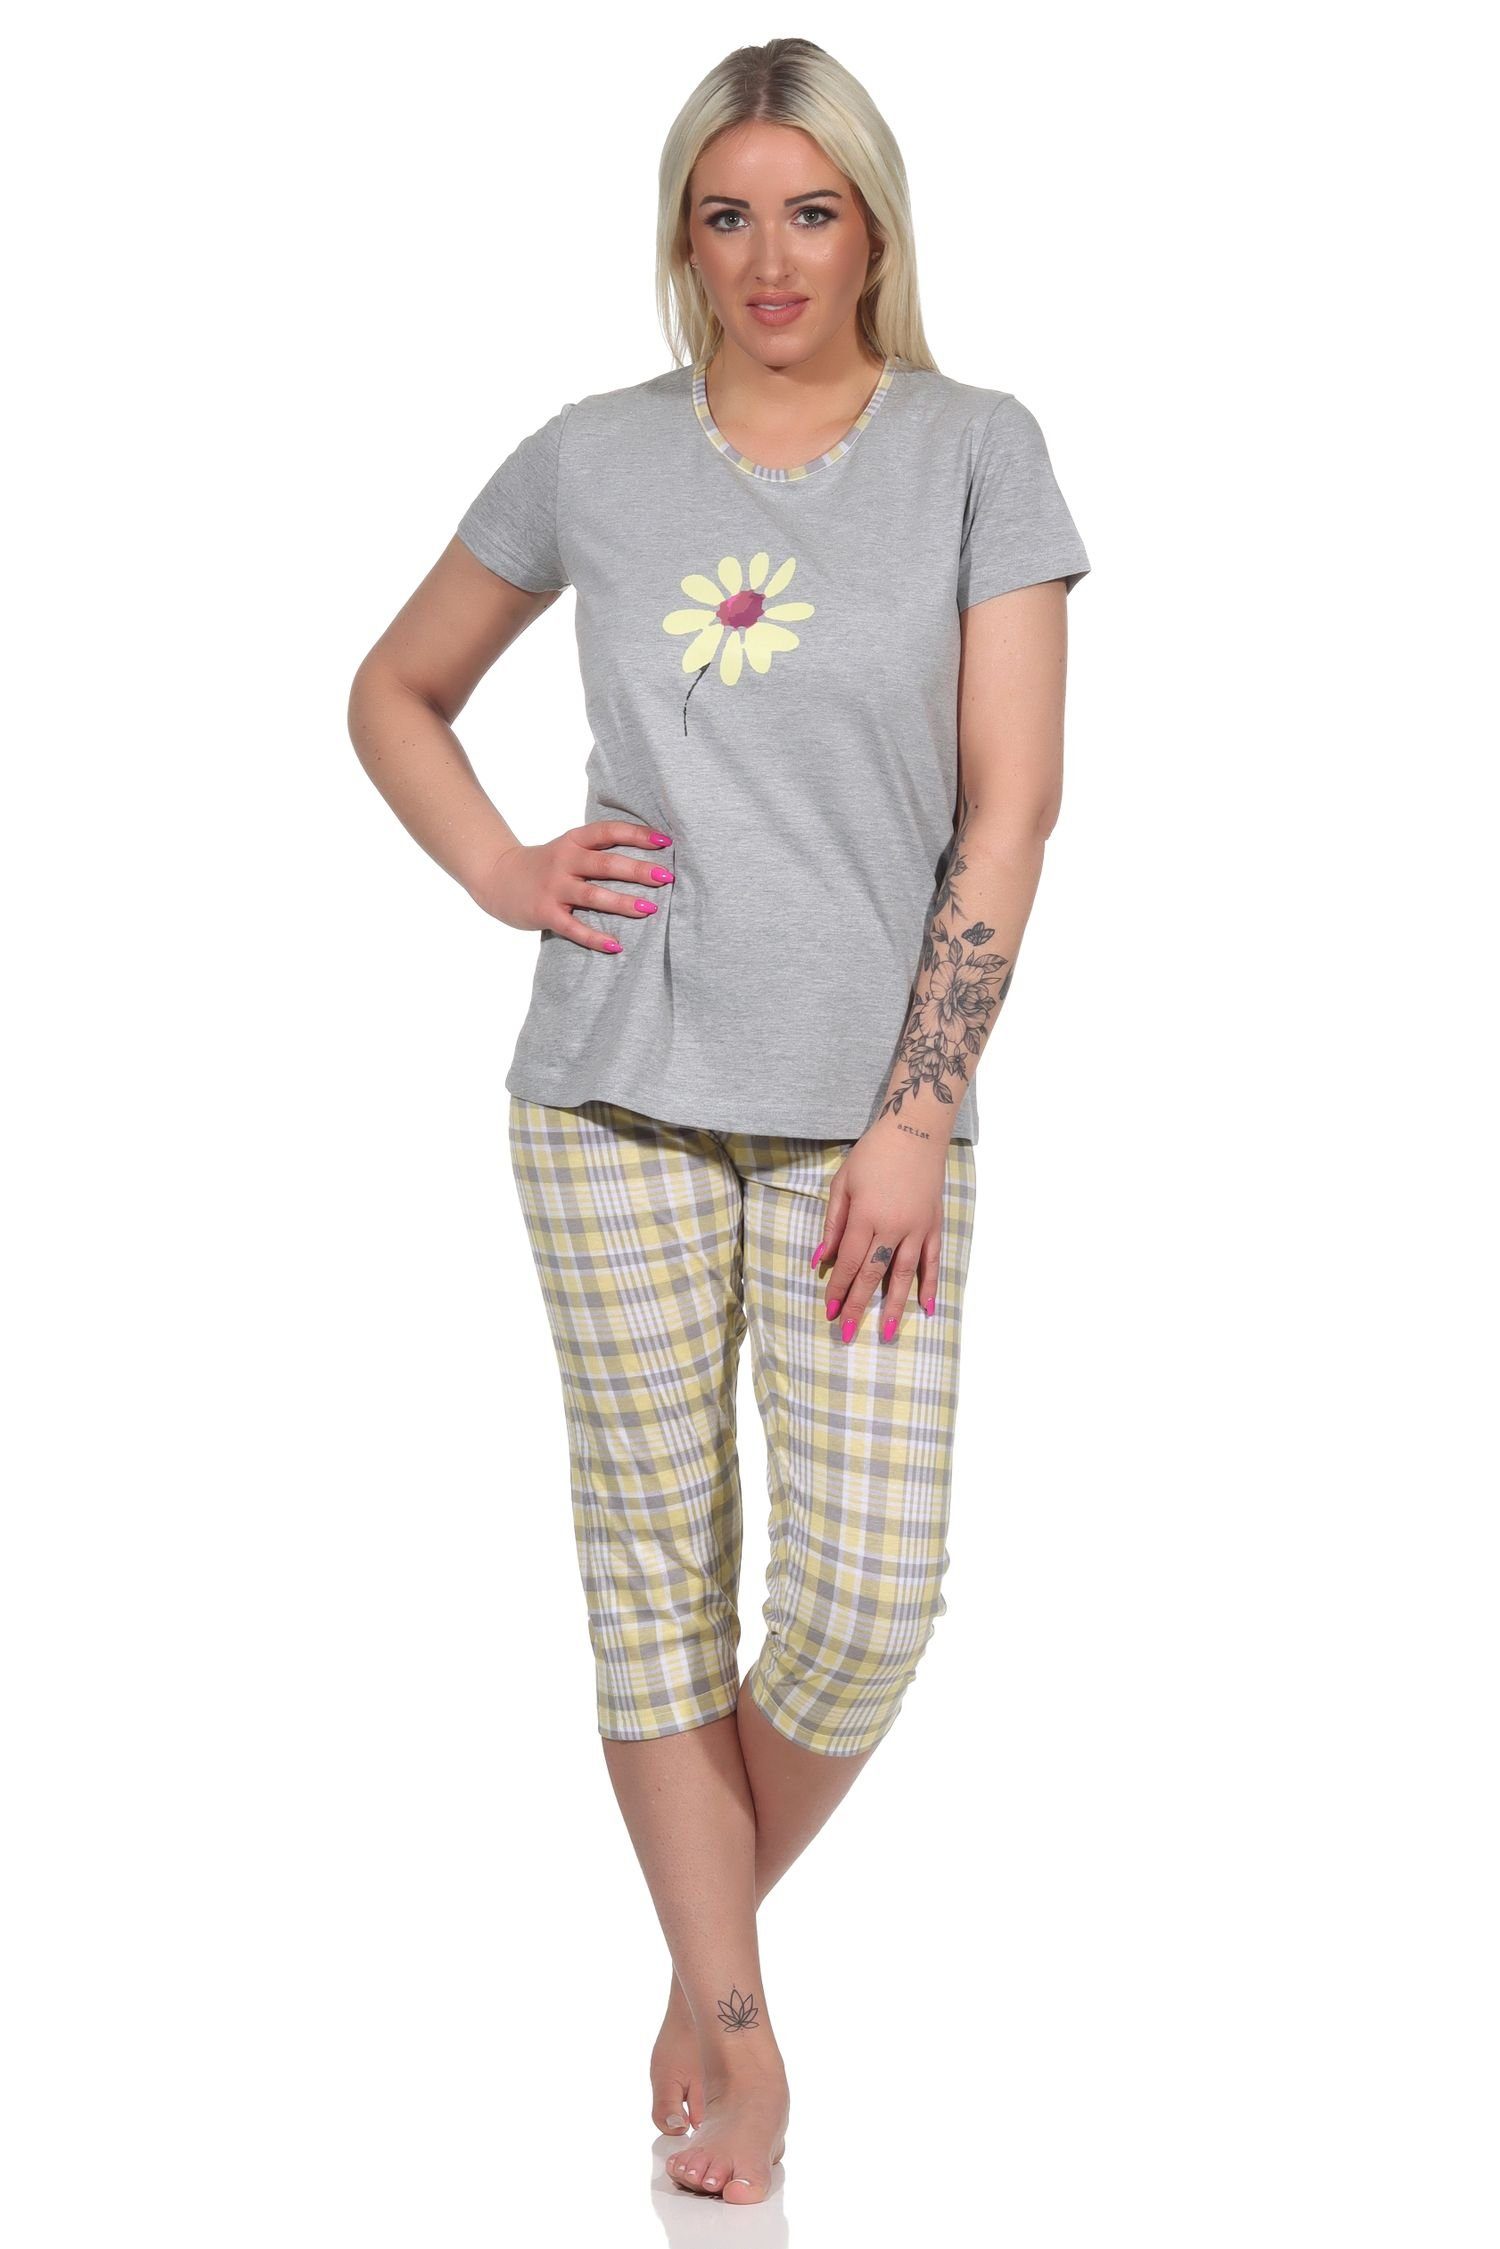 Caprihose Front-Print und Pyjama Karo Capri Schlafanzug Pyjama Damen Normann gelb mit